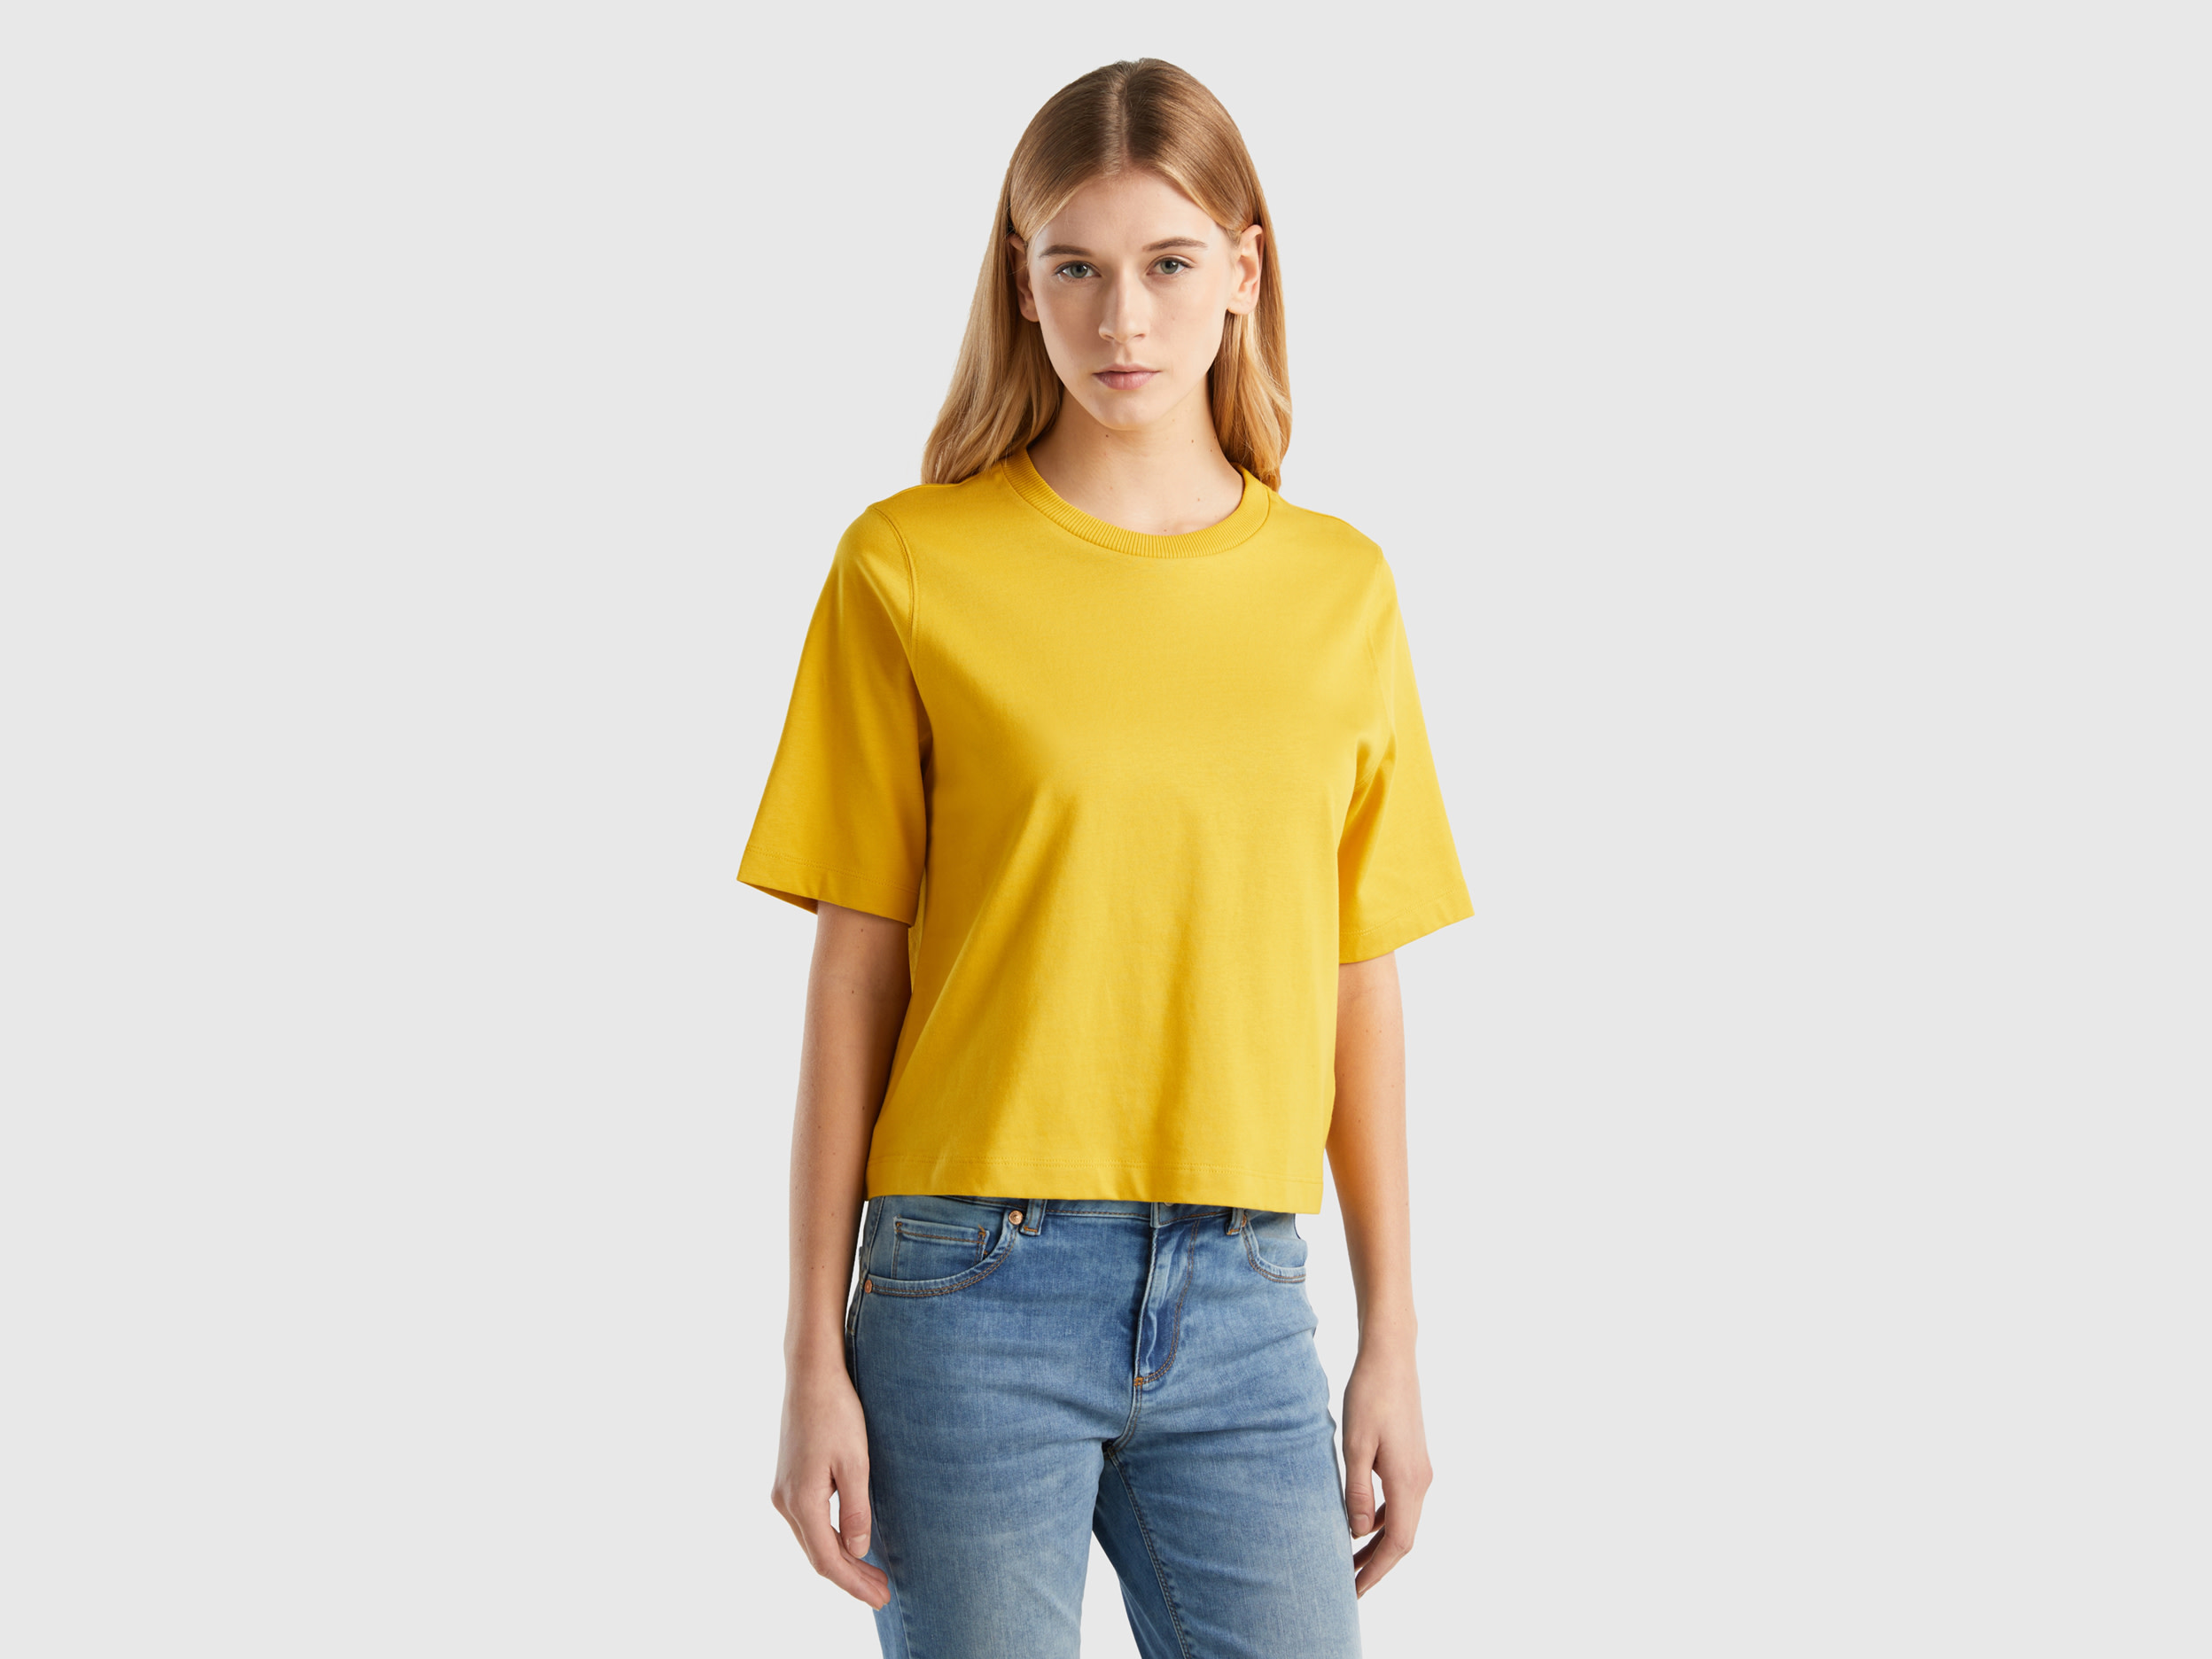 Benetton, 100% Cotton Boxy Fit T-shirt, size XL, Yellow, Women